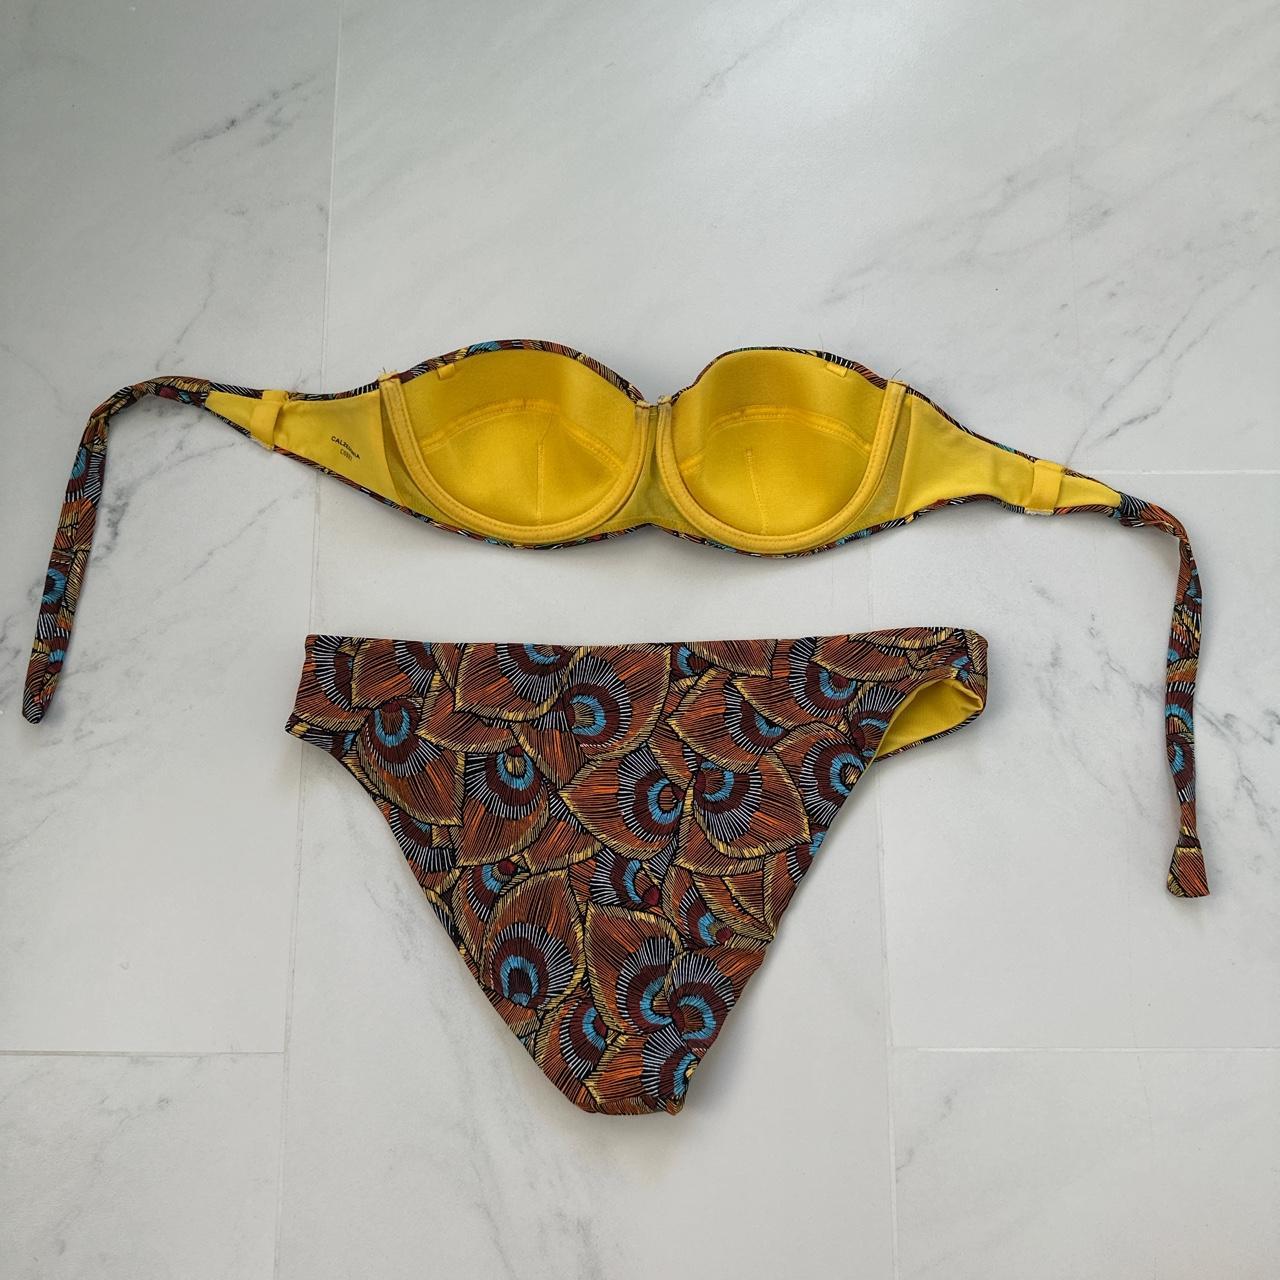 Calzedonia Women's Bikinis-and-tankini-sets (2)